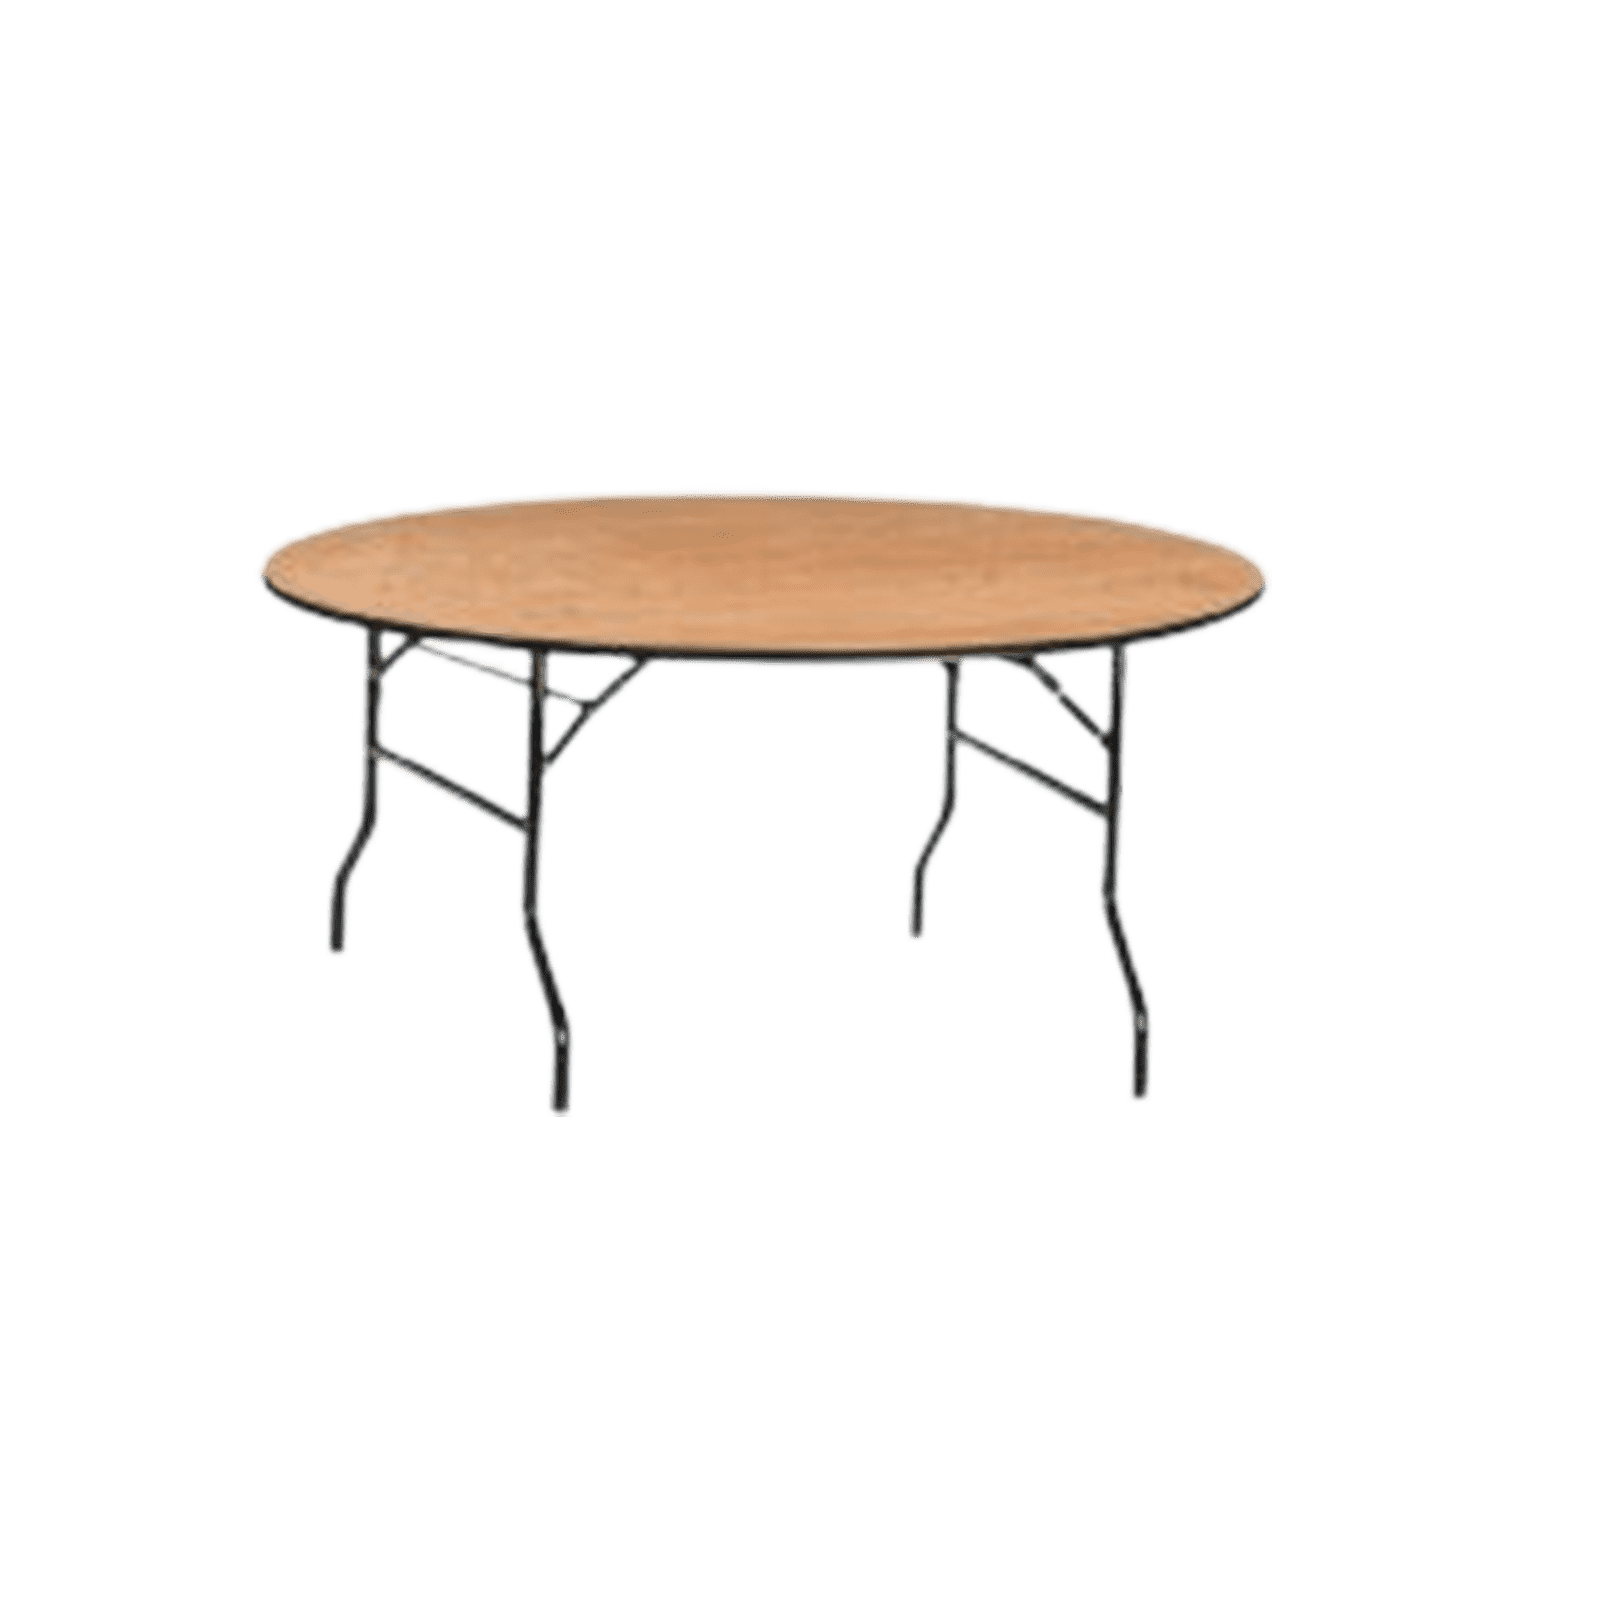 Table ronde pliante 150cm, LOUTAFETE